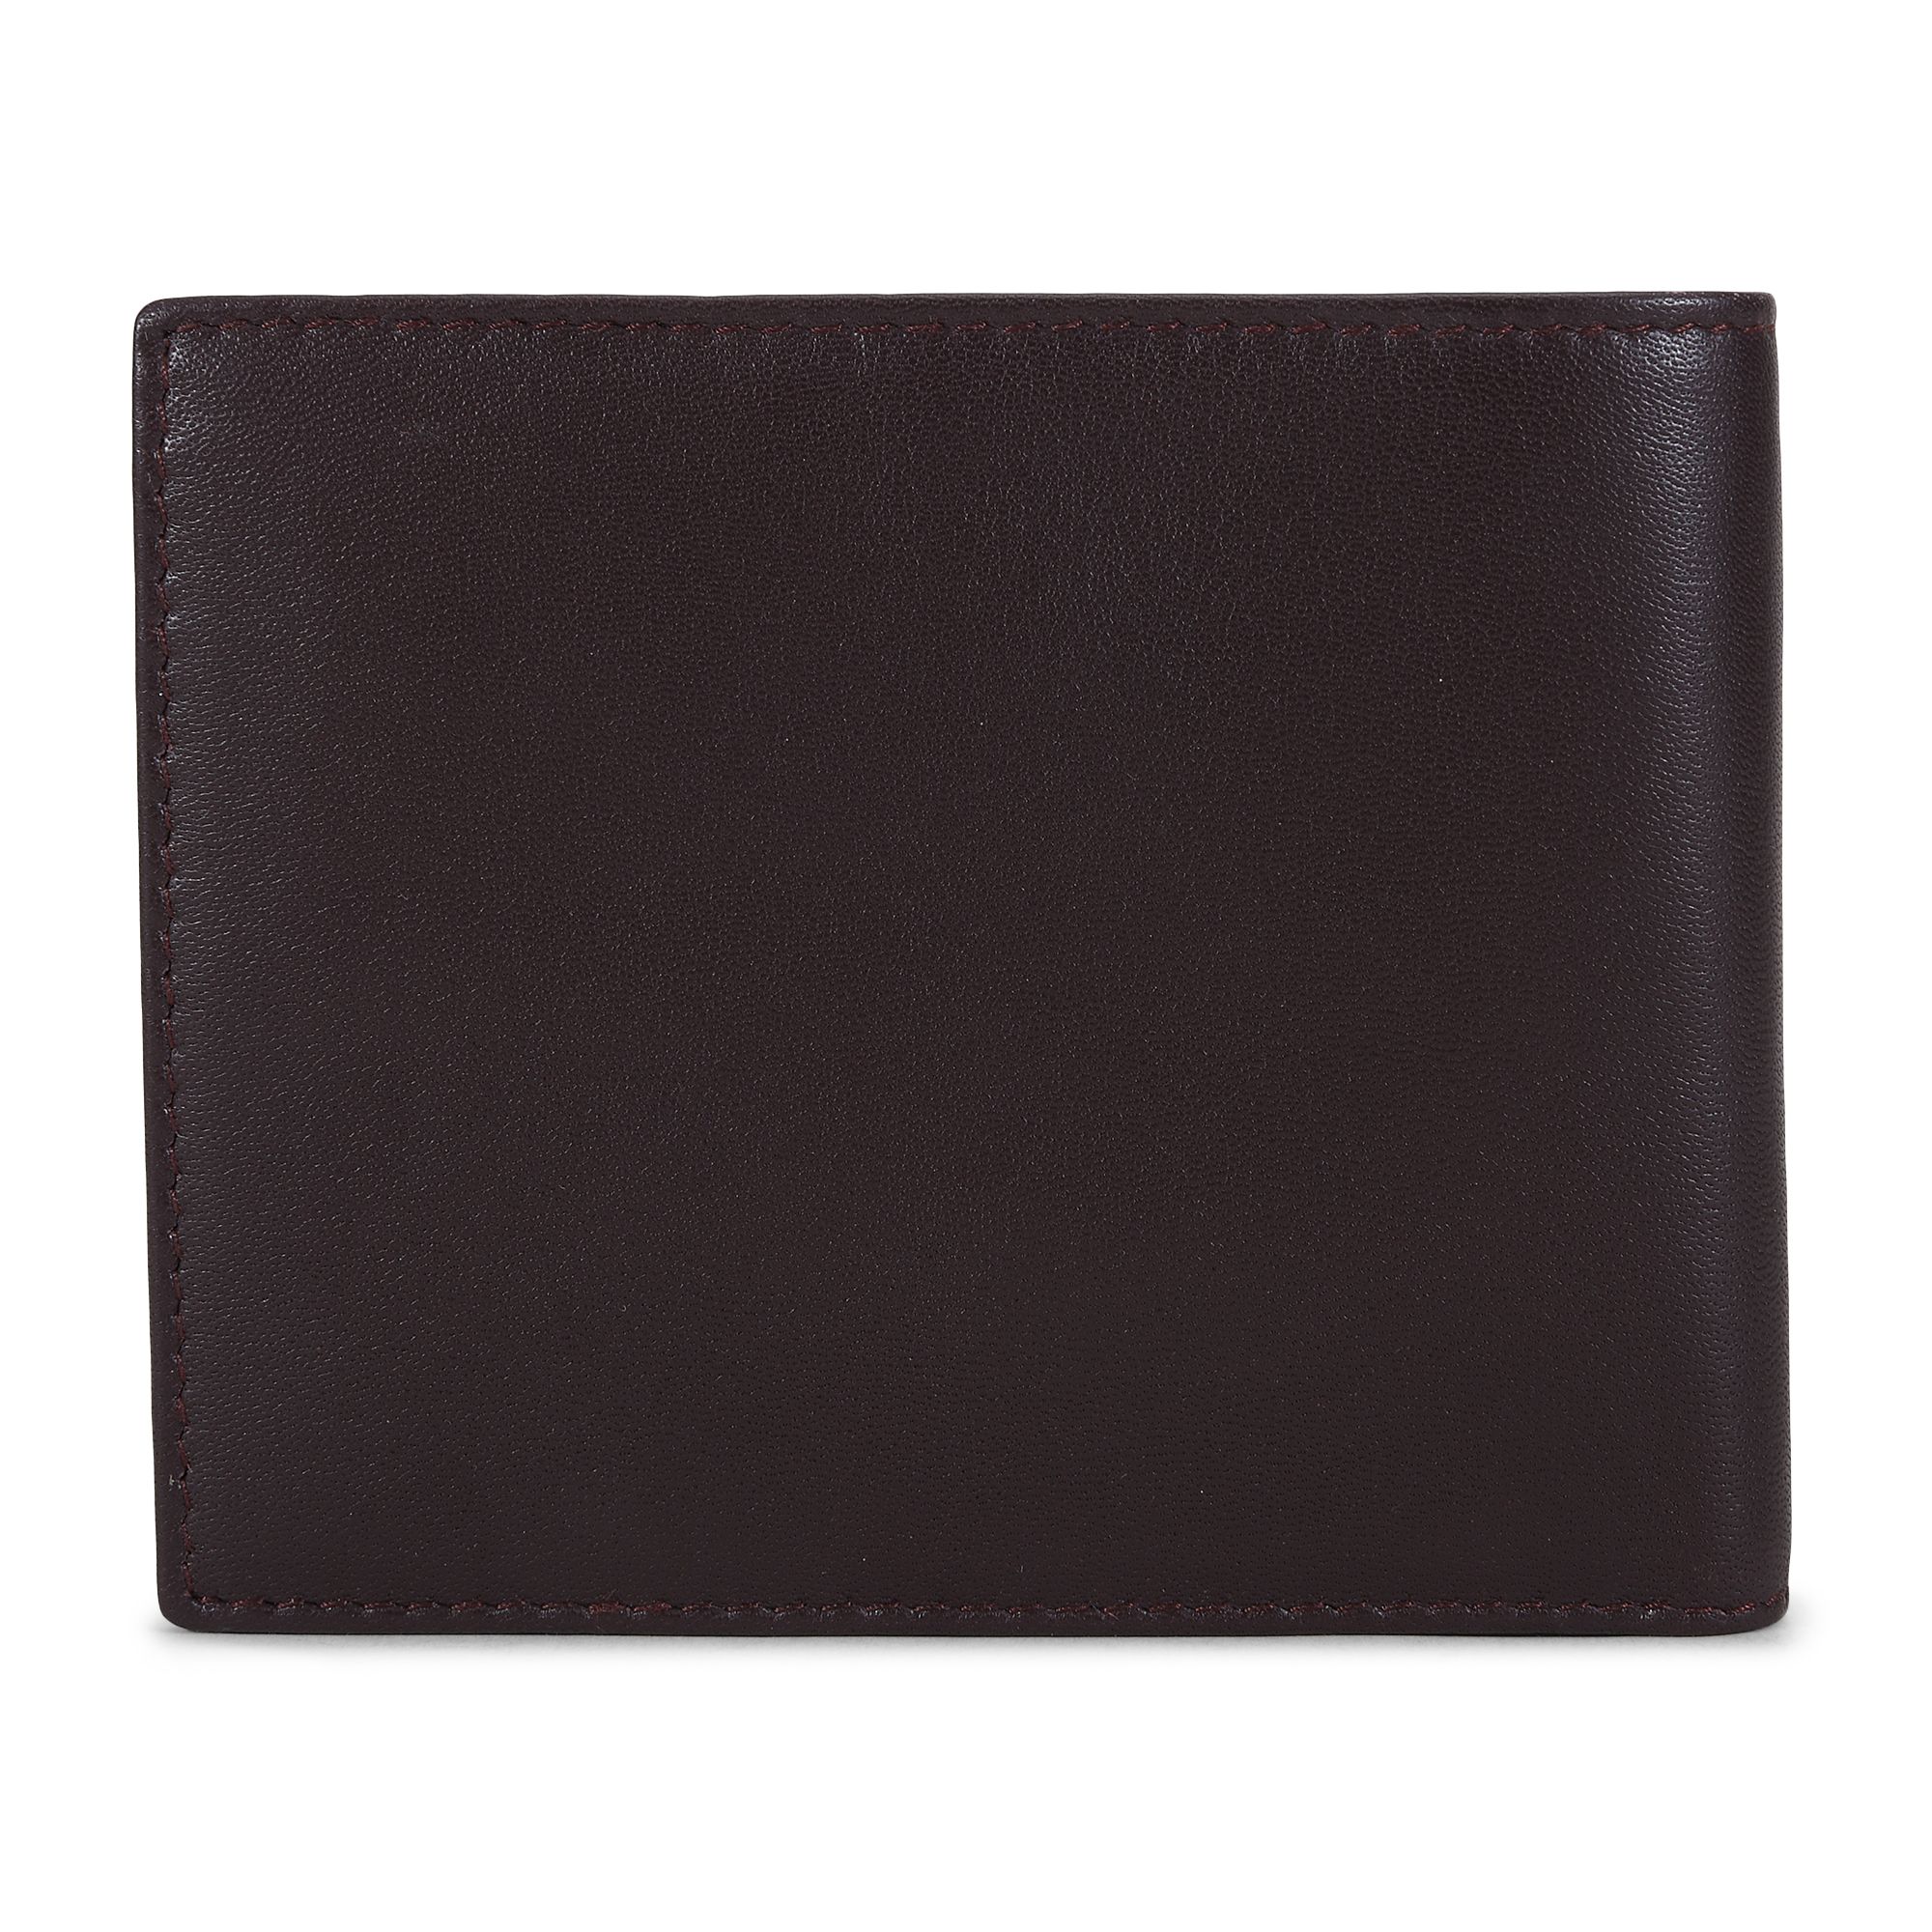 Maroon leather wallet